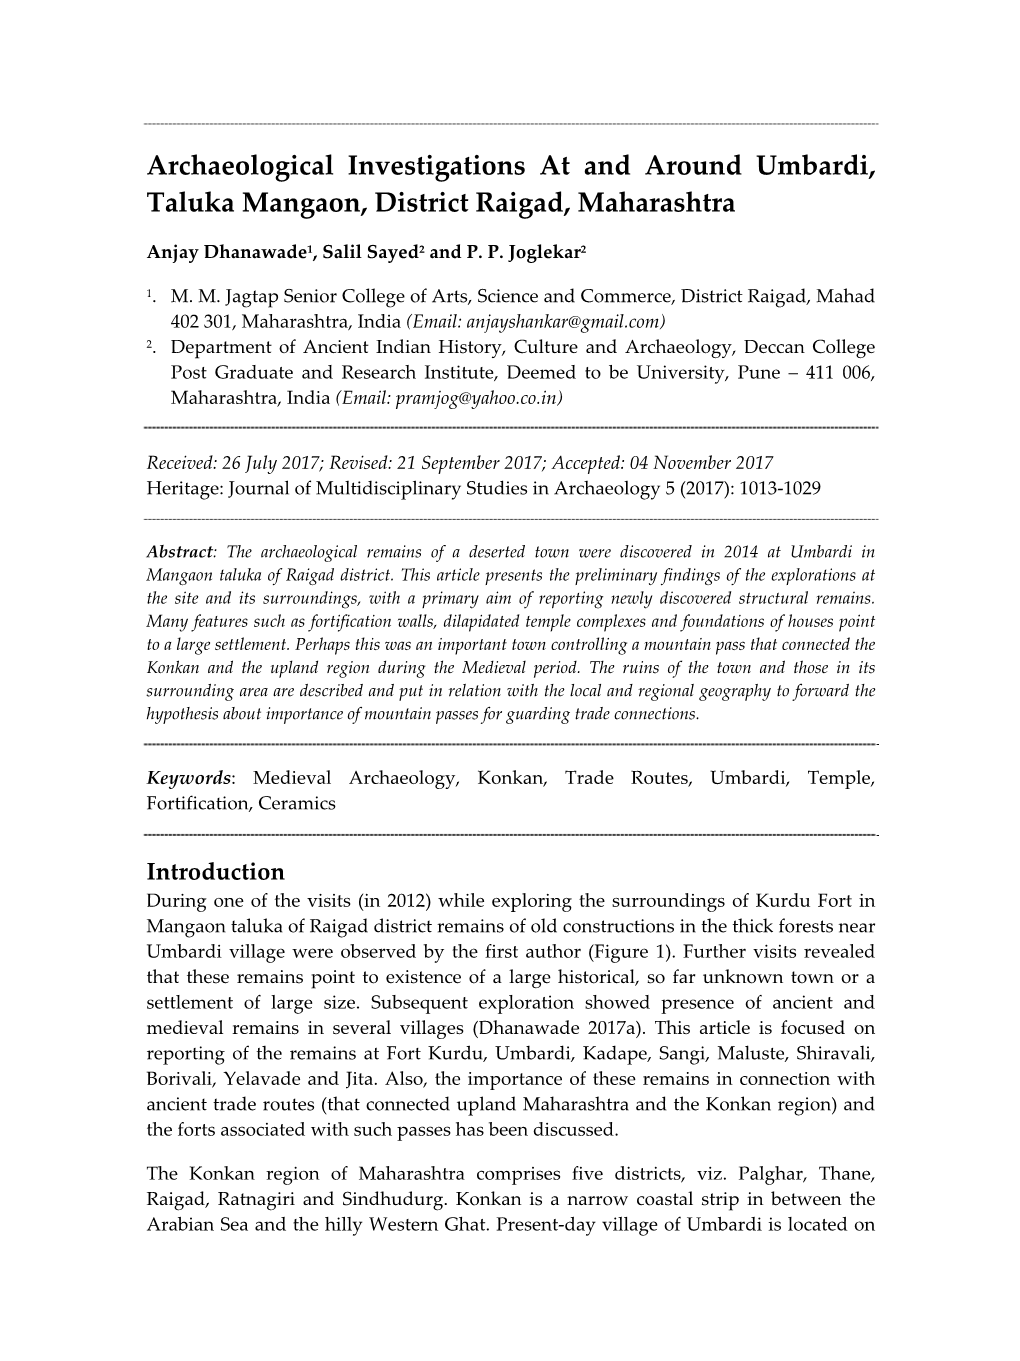 Archaeological Investigations at and Around Umbardi, Taluka Mangaon, District Raigad, Maharashtra